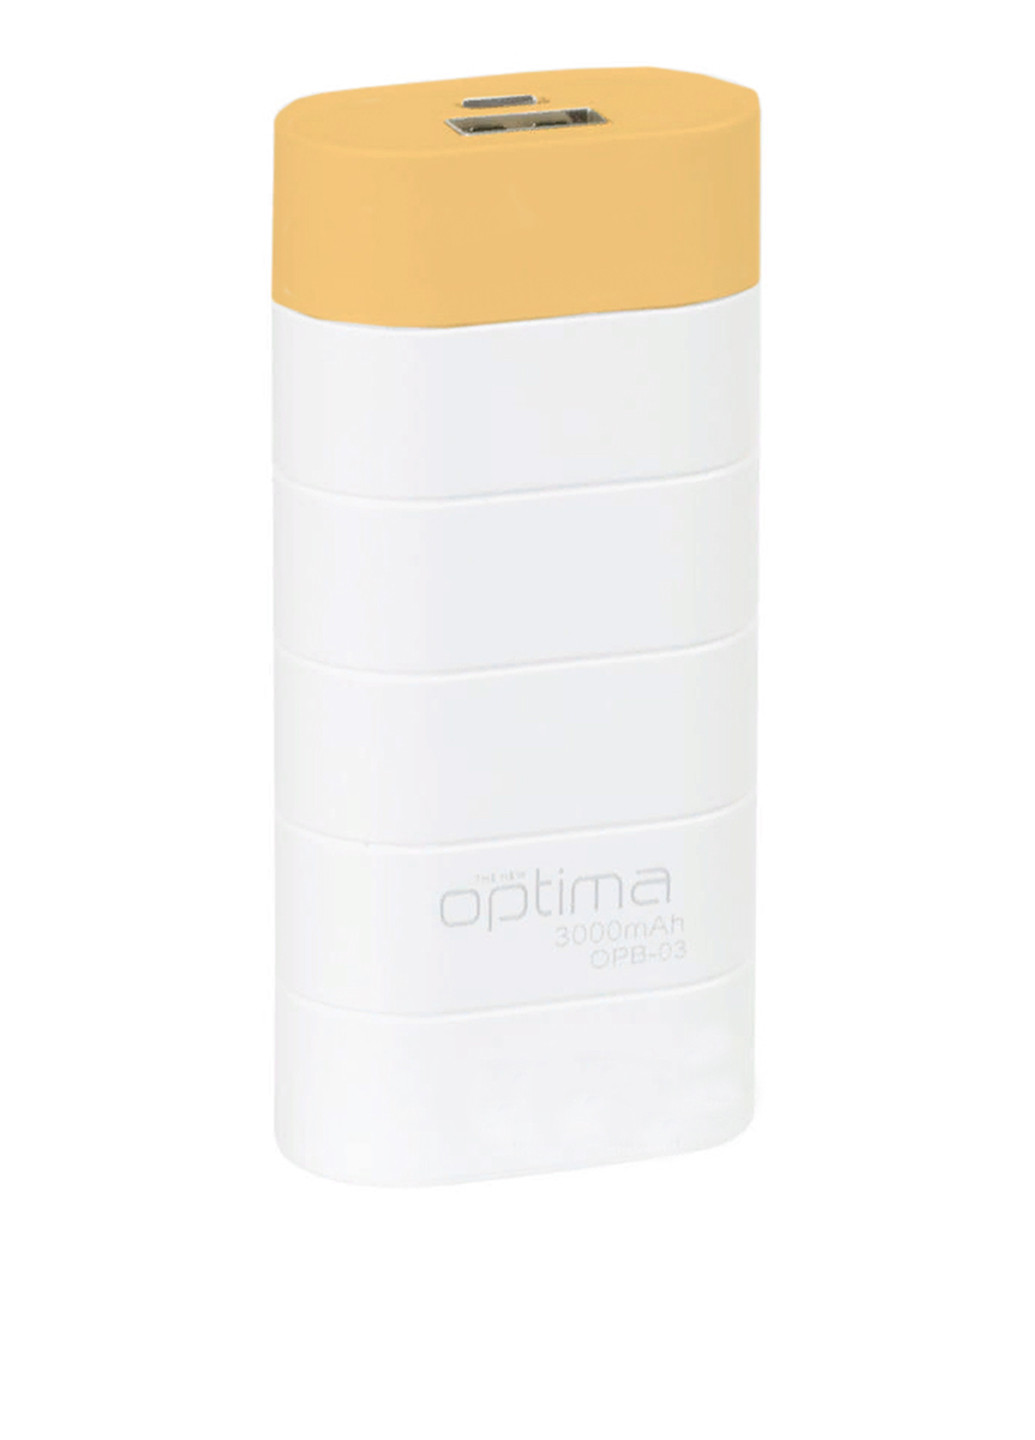 Универсальная батарея Promo Series 3000mAh White/Orange (павербанк) Optima OP-3